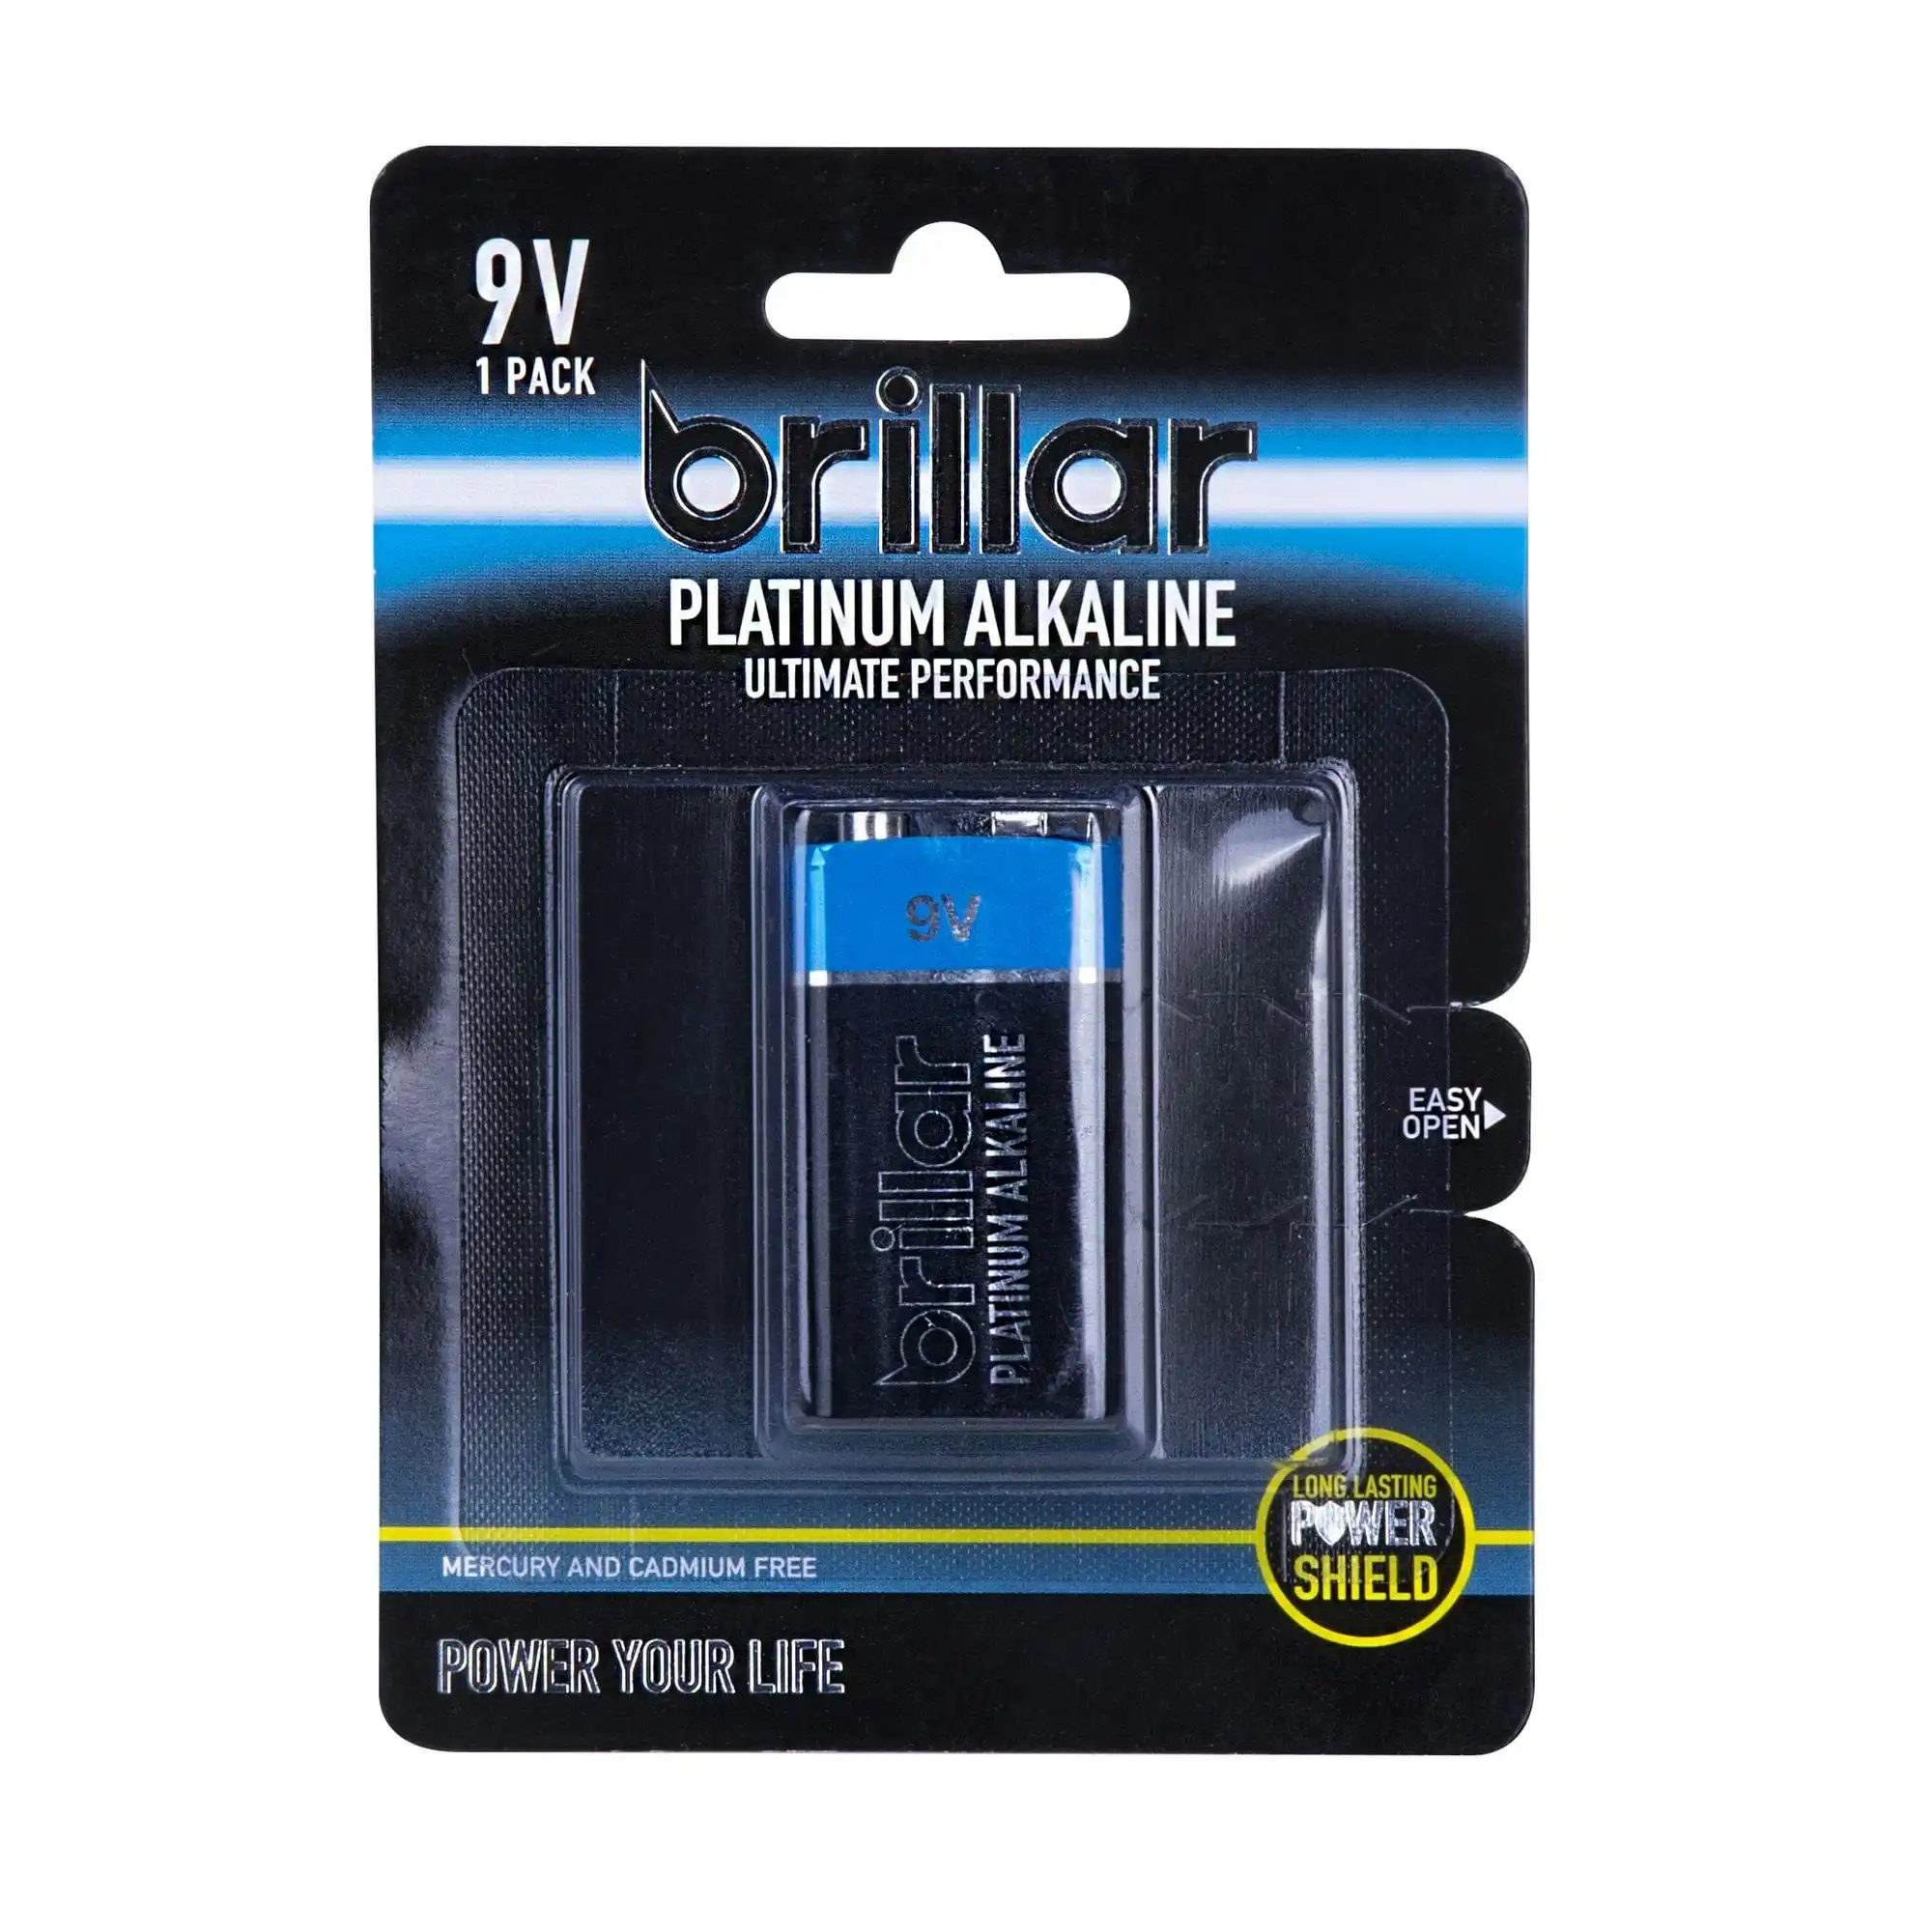 Brillar 9V Platinum Alkaline Battery 2 Pack